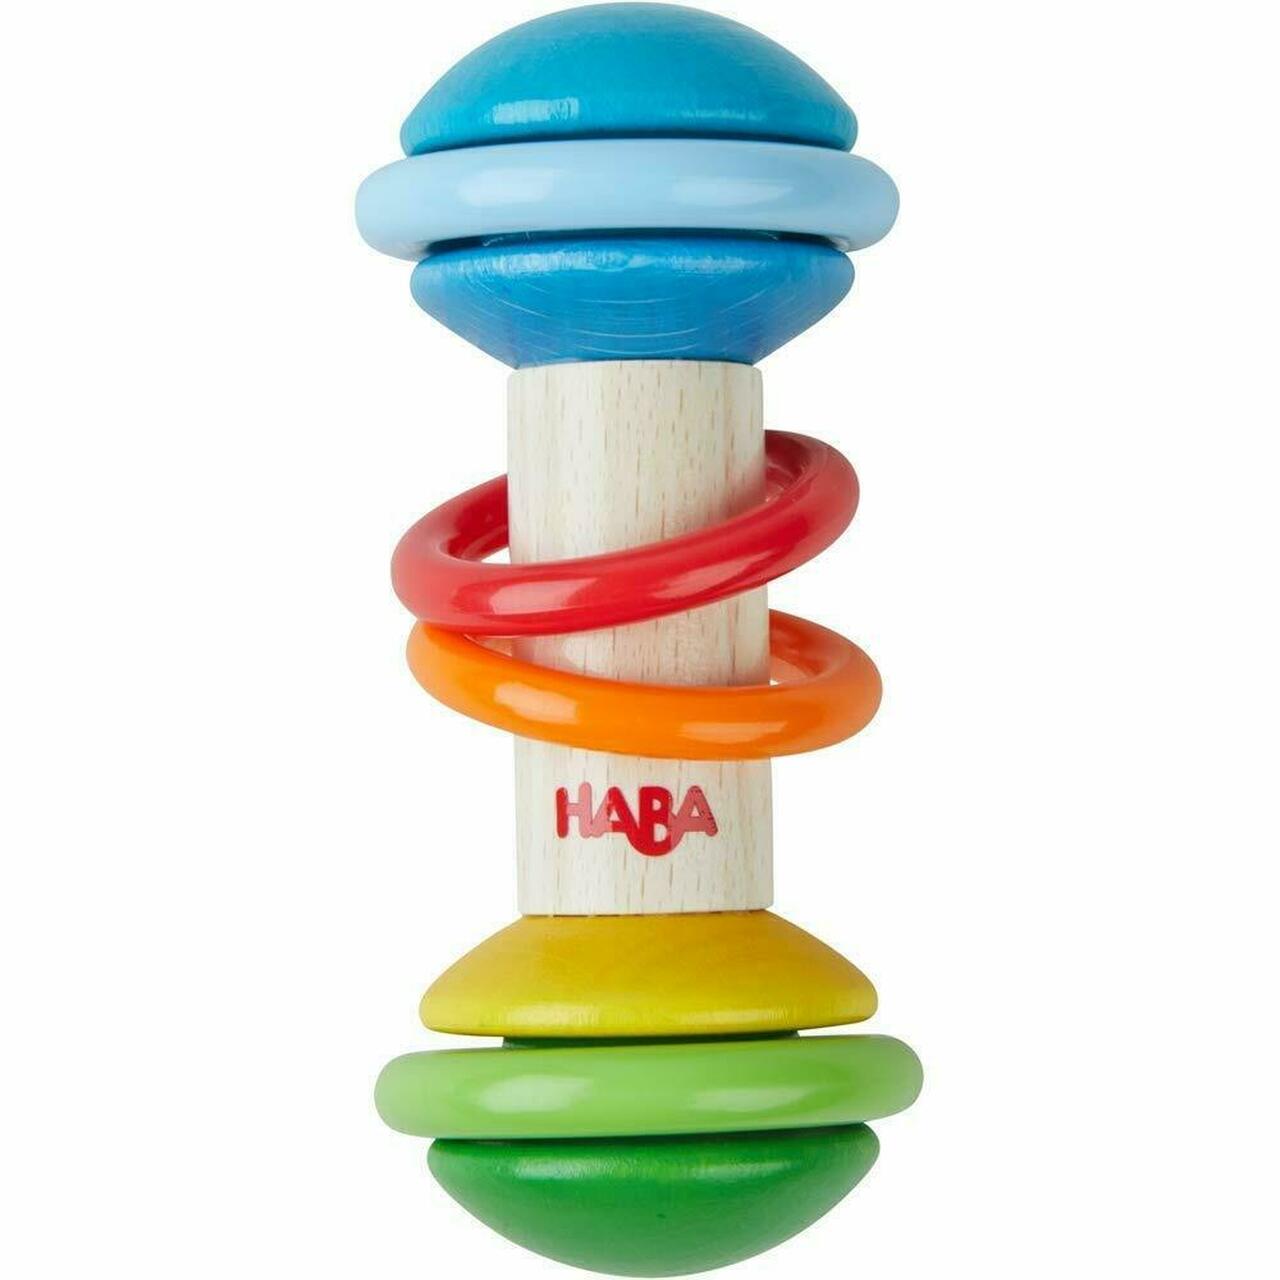 HABA Rainmaker Clutching Toy